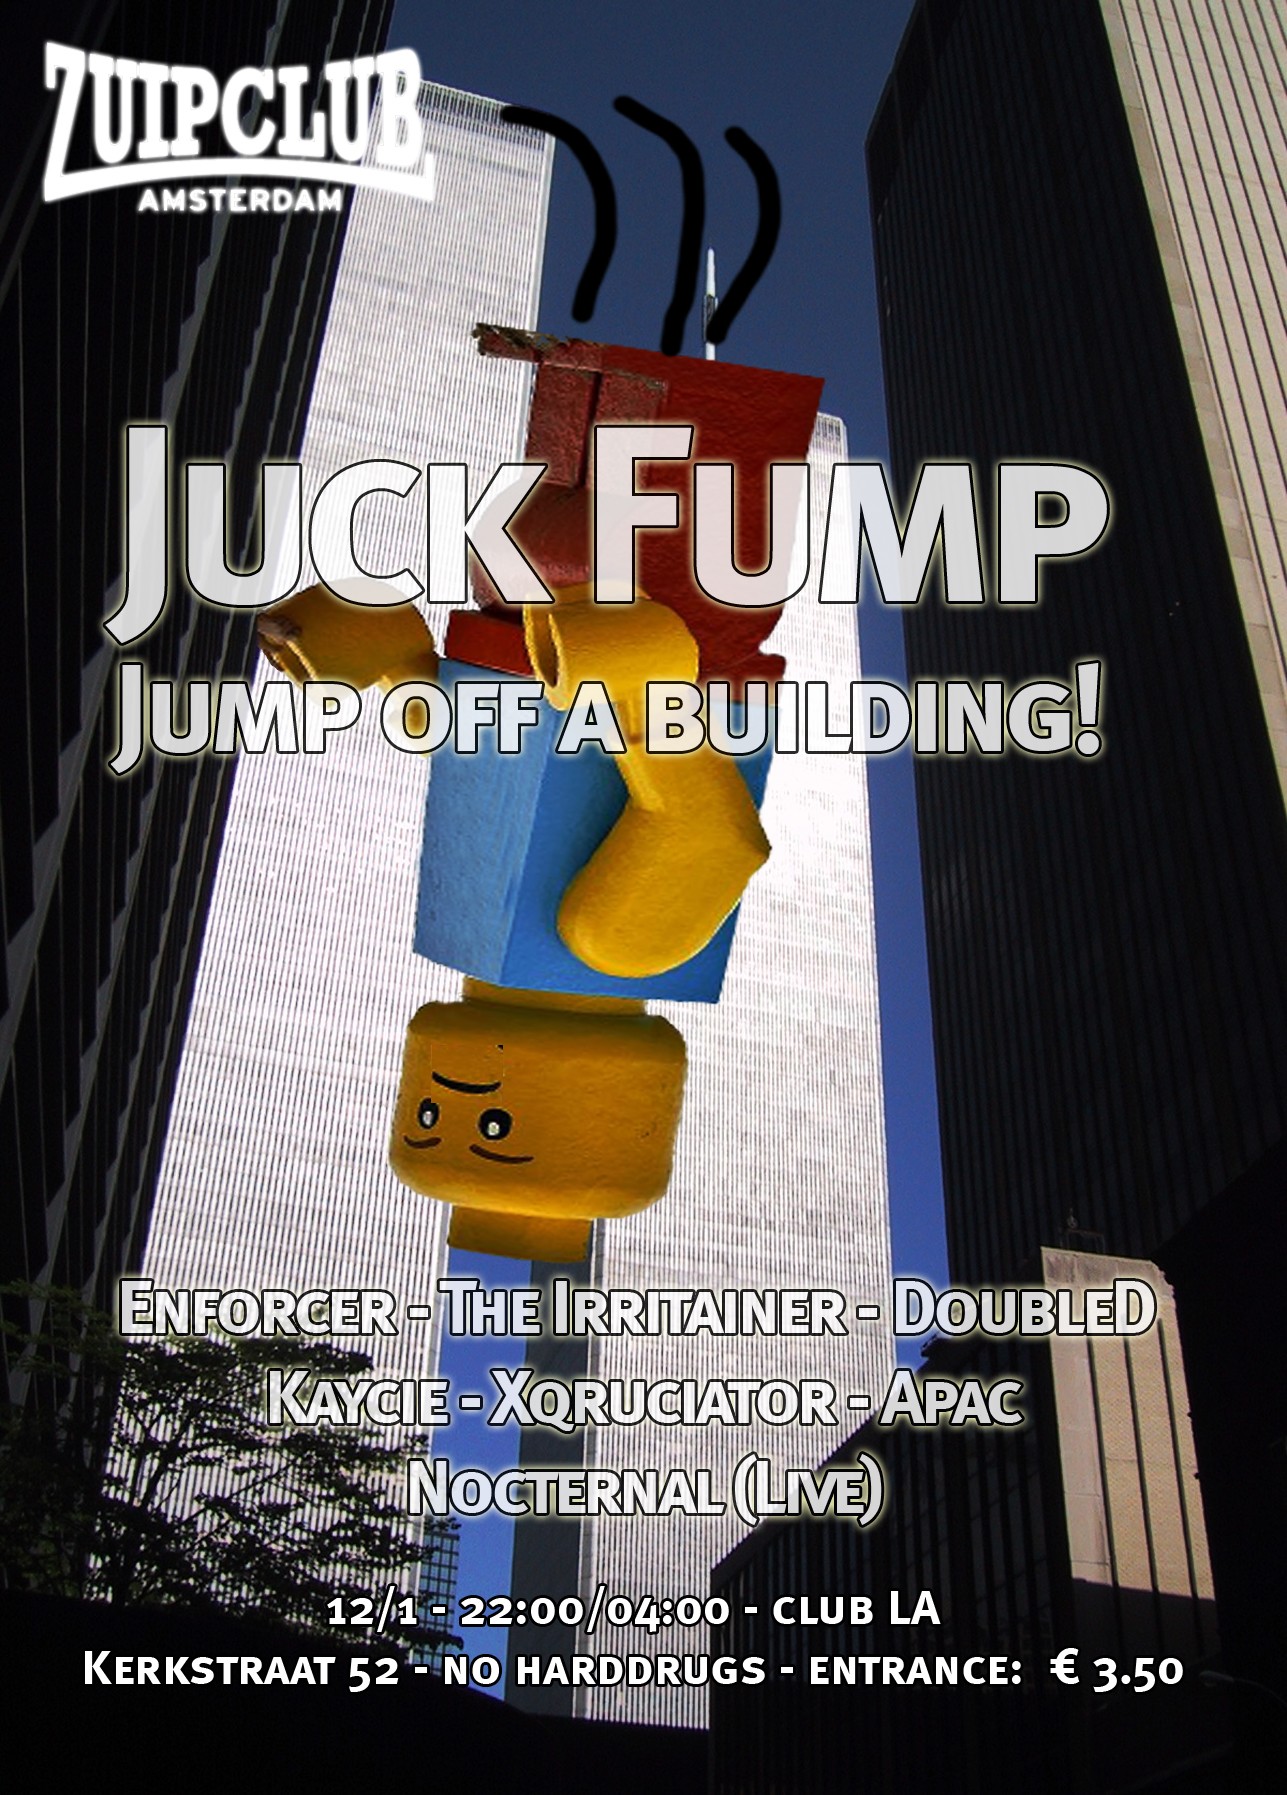 Juck fump